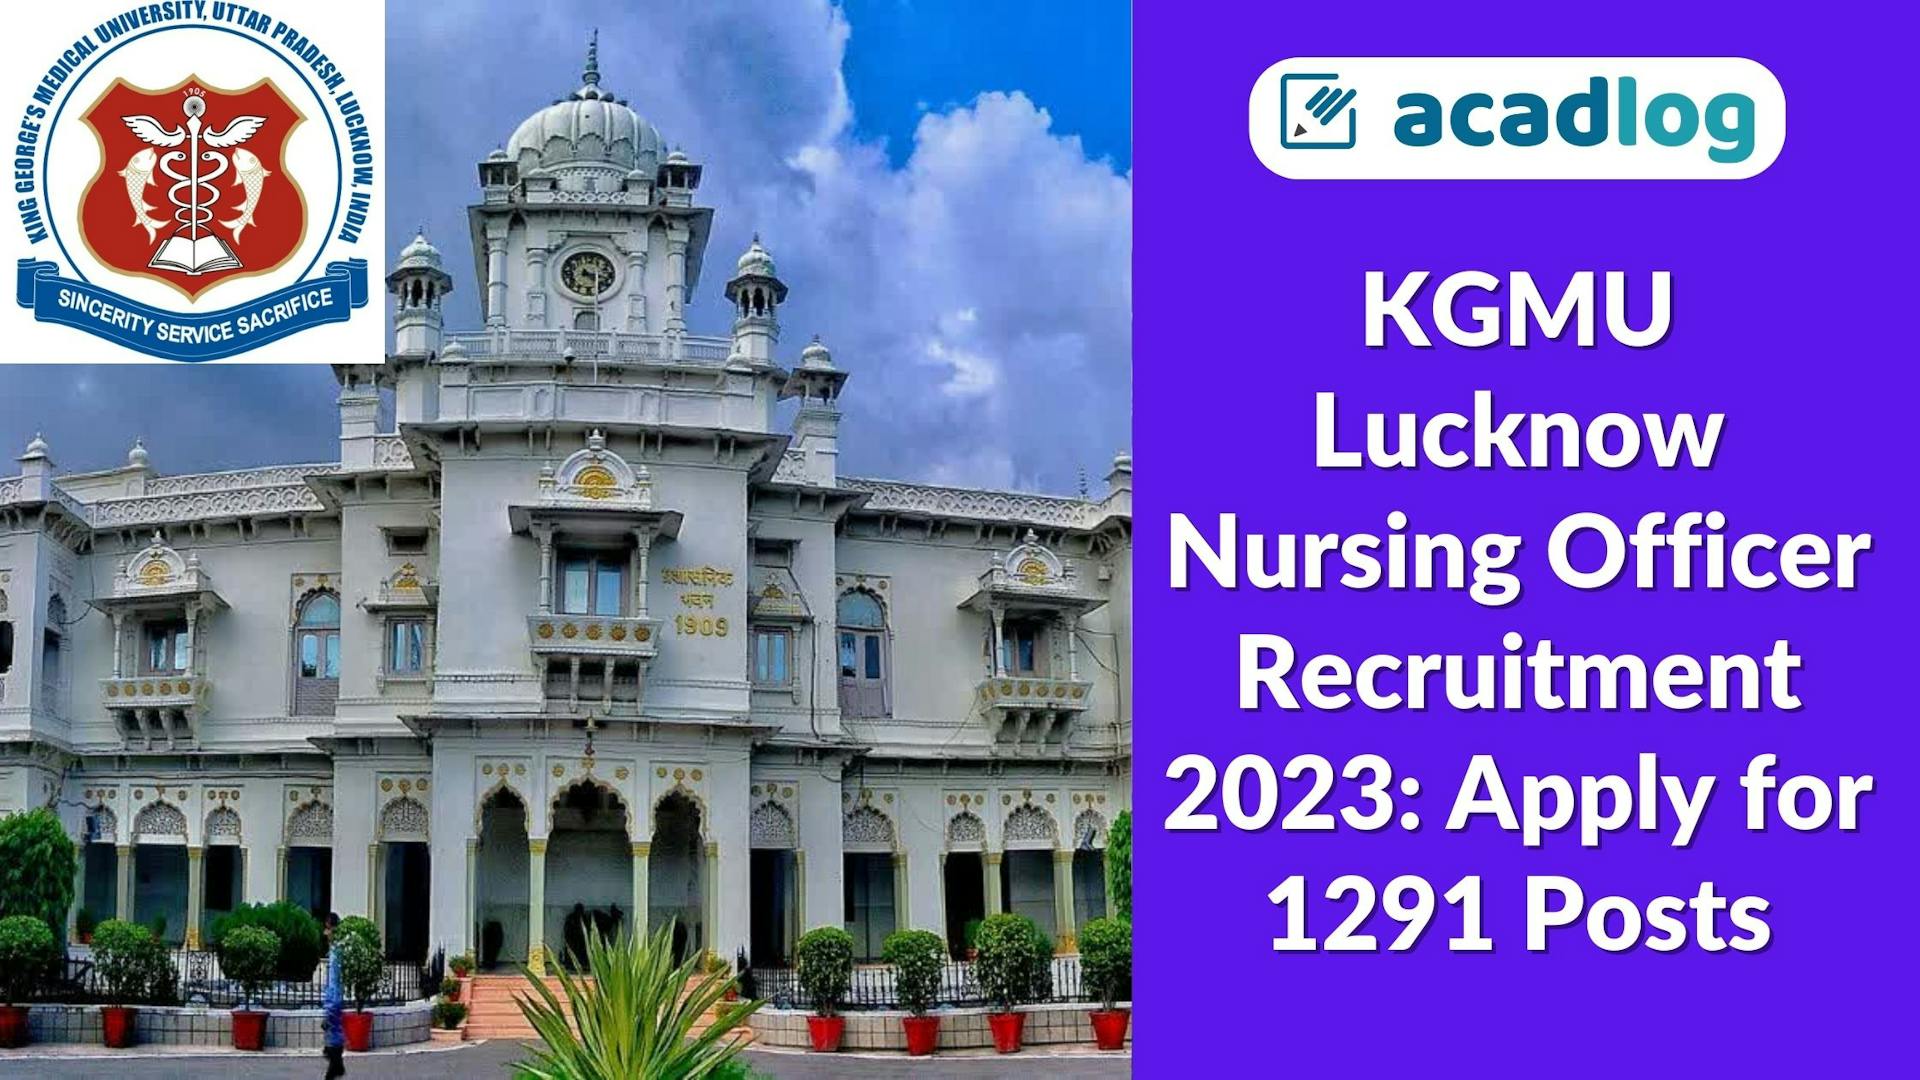 KGMU Lucknow Nursing Officer Recruitment 2023: Apply for 1291 Posts